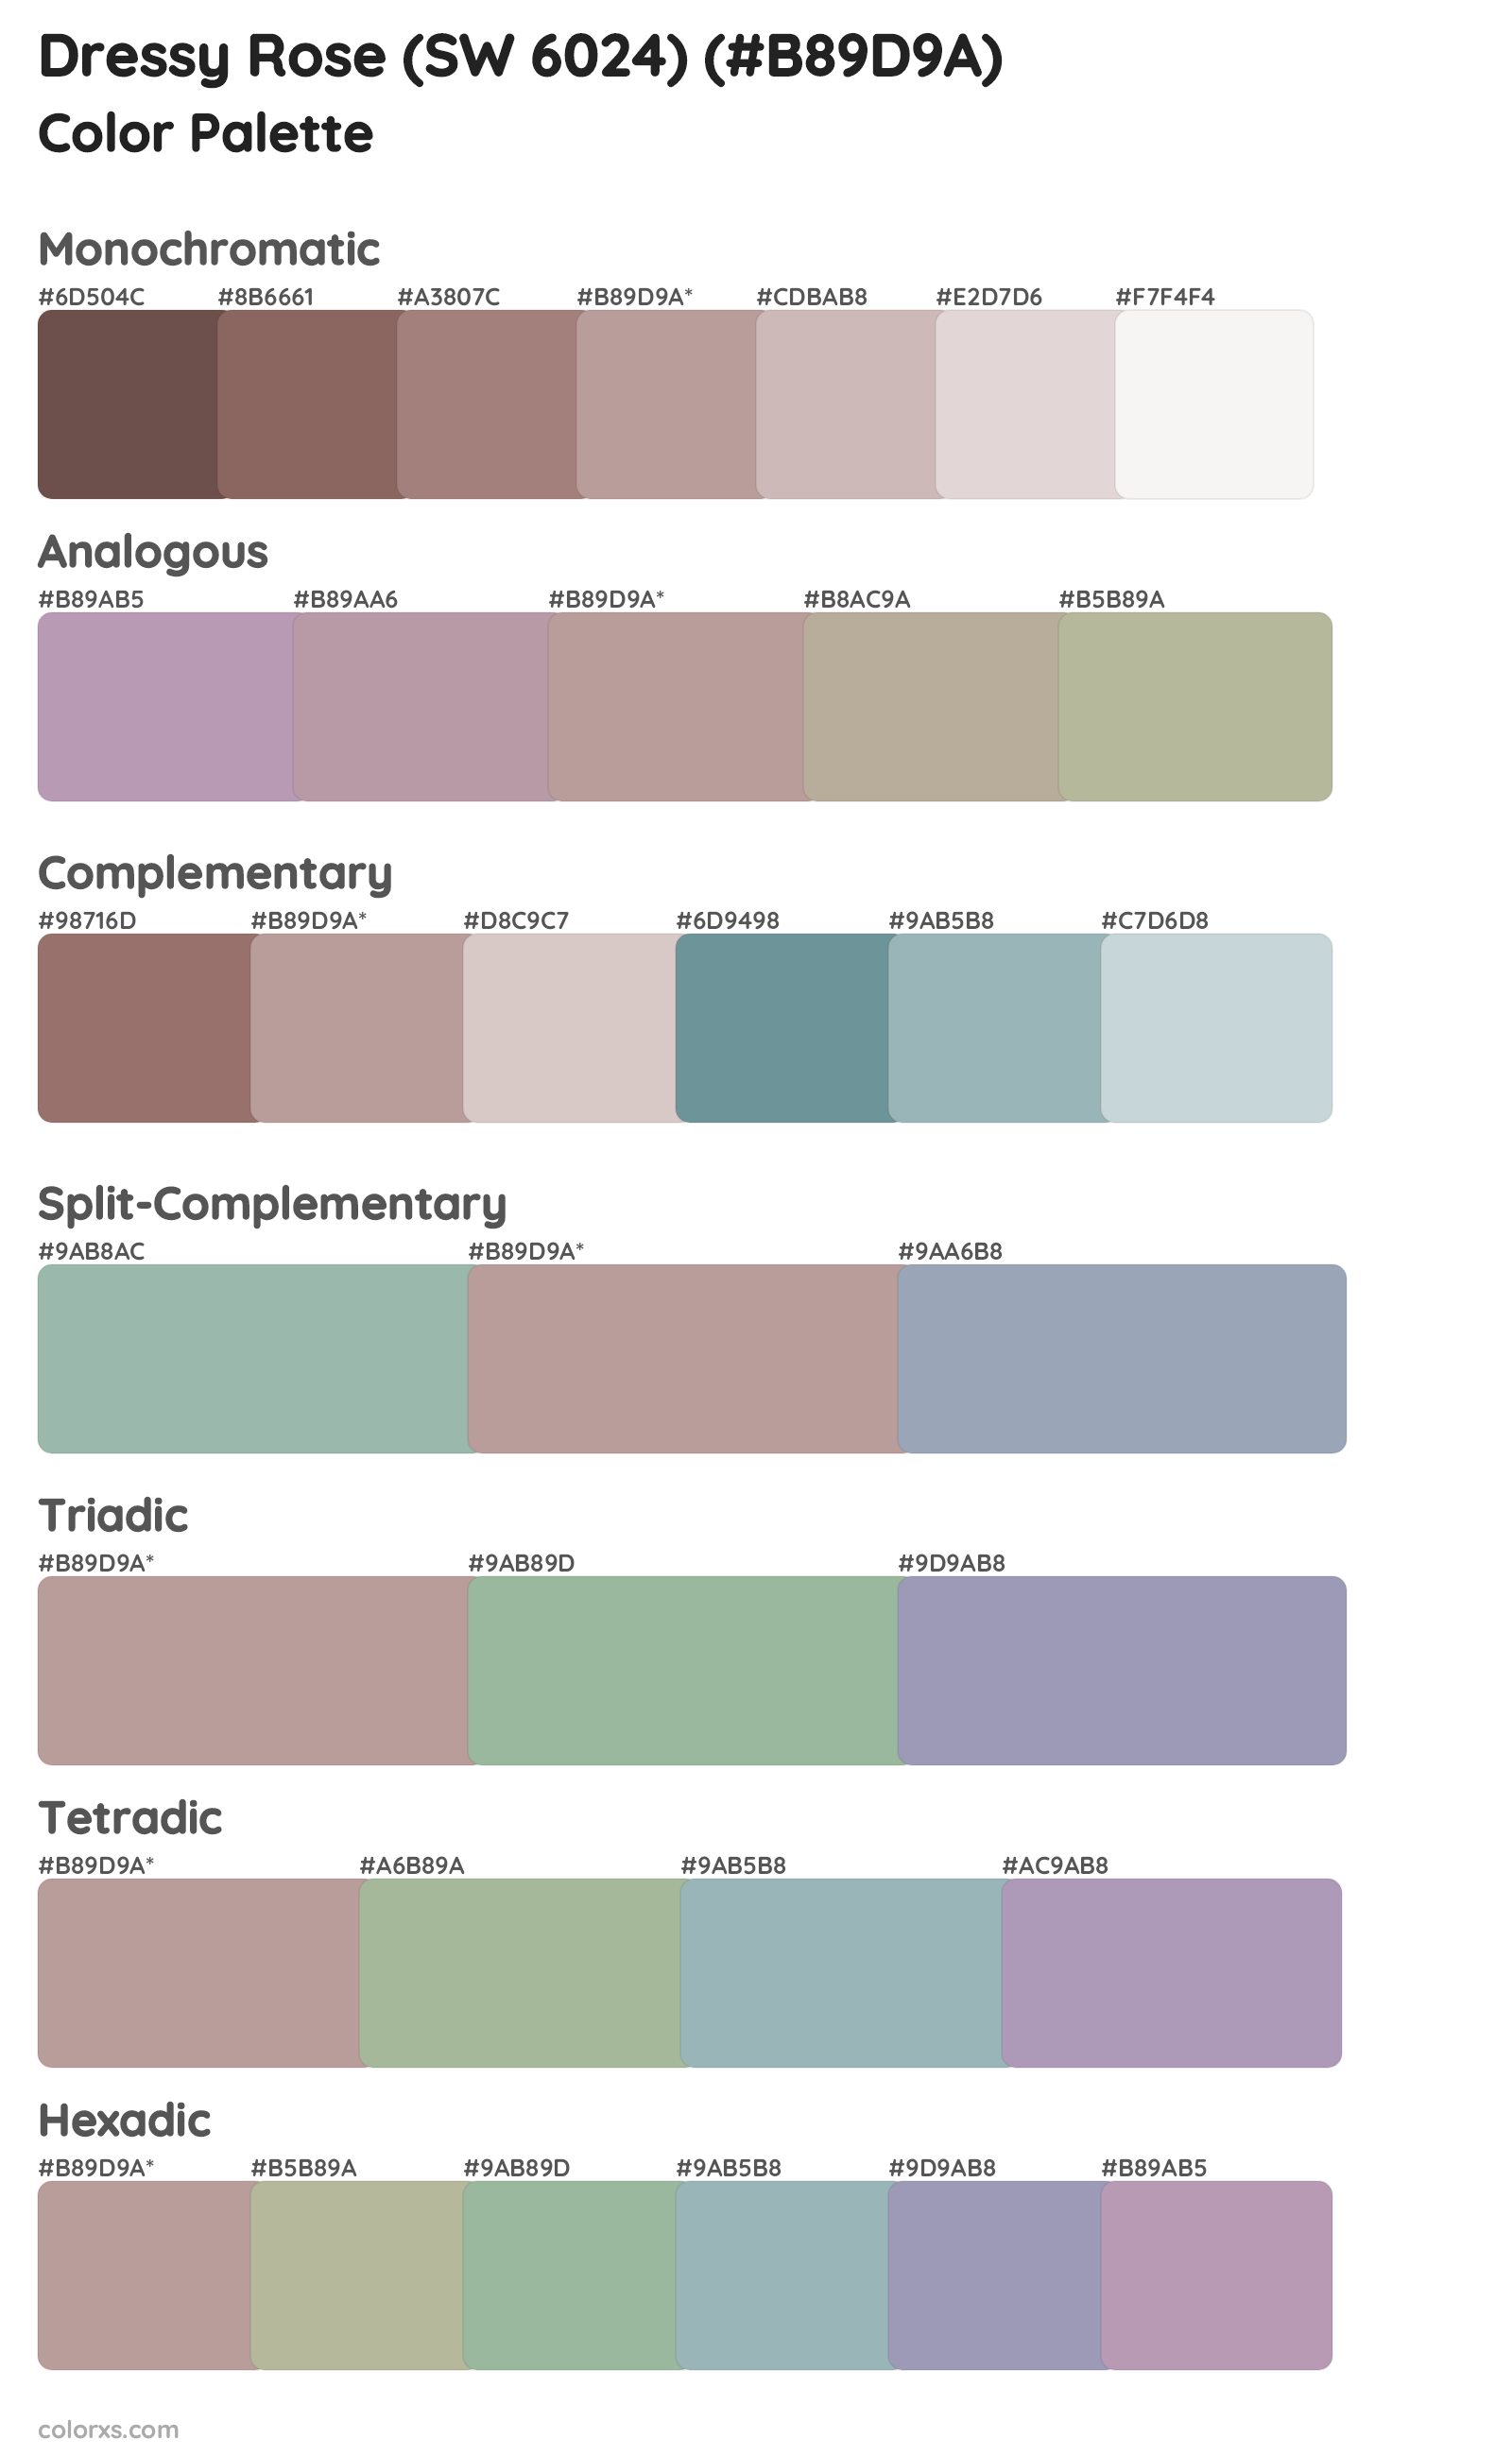 Dressy Rose (SW 6024) Color Scheme Palettes